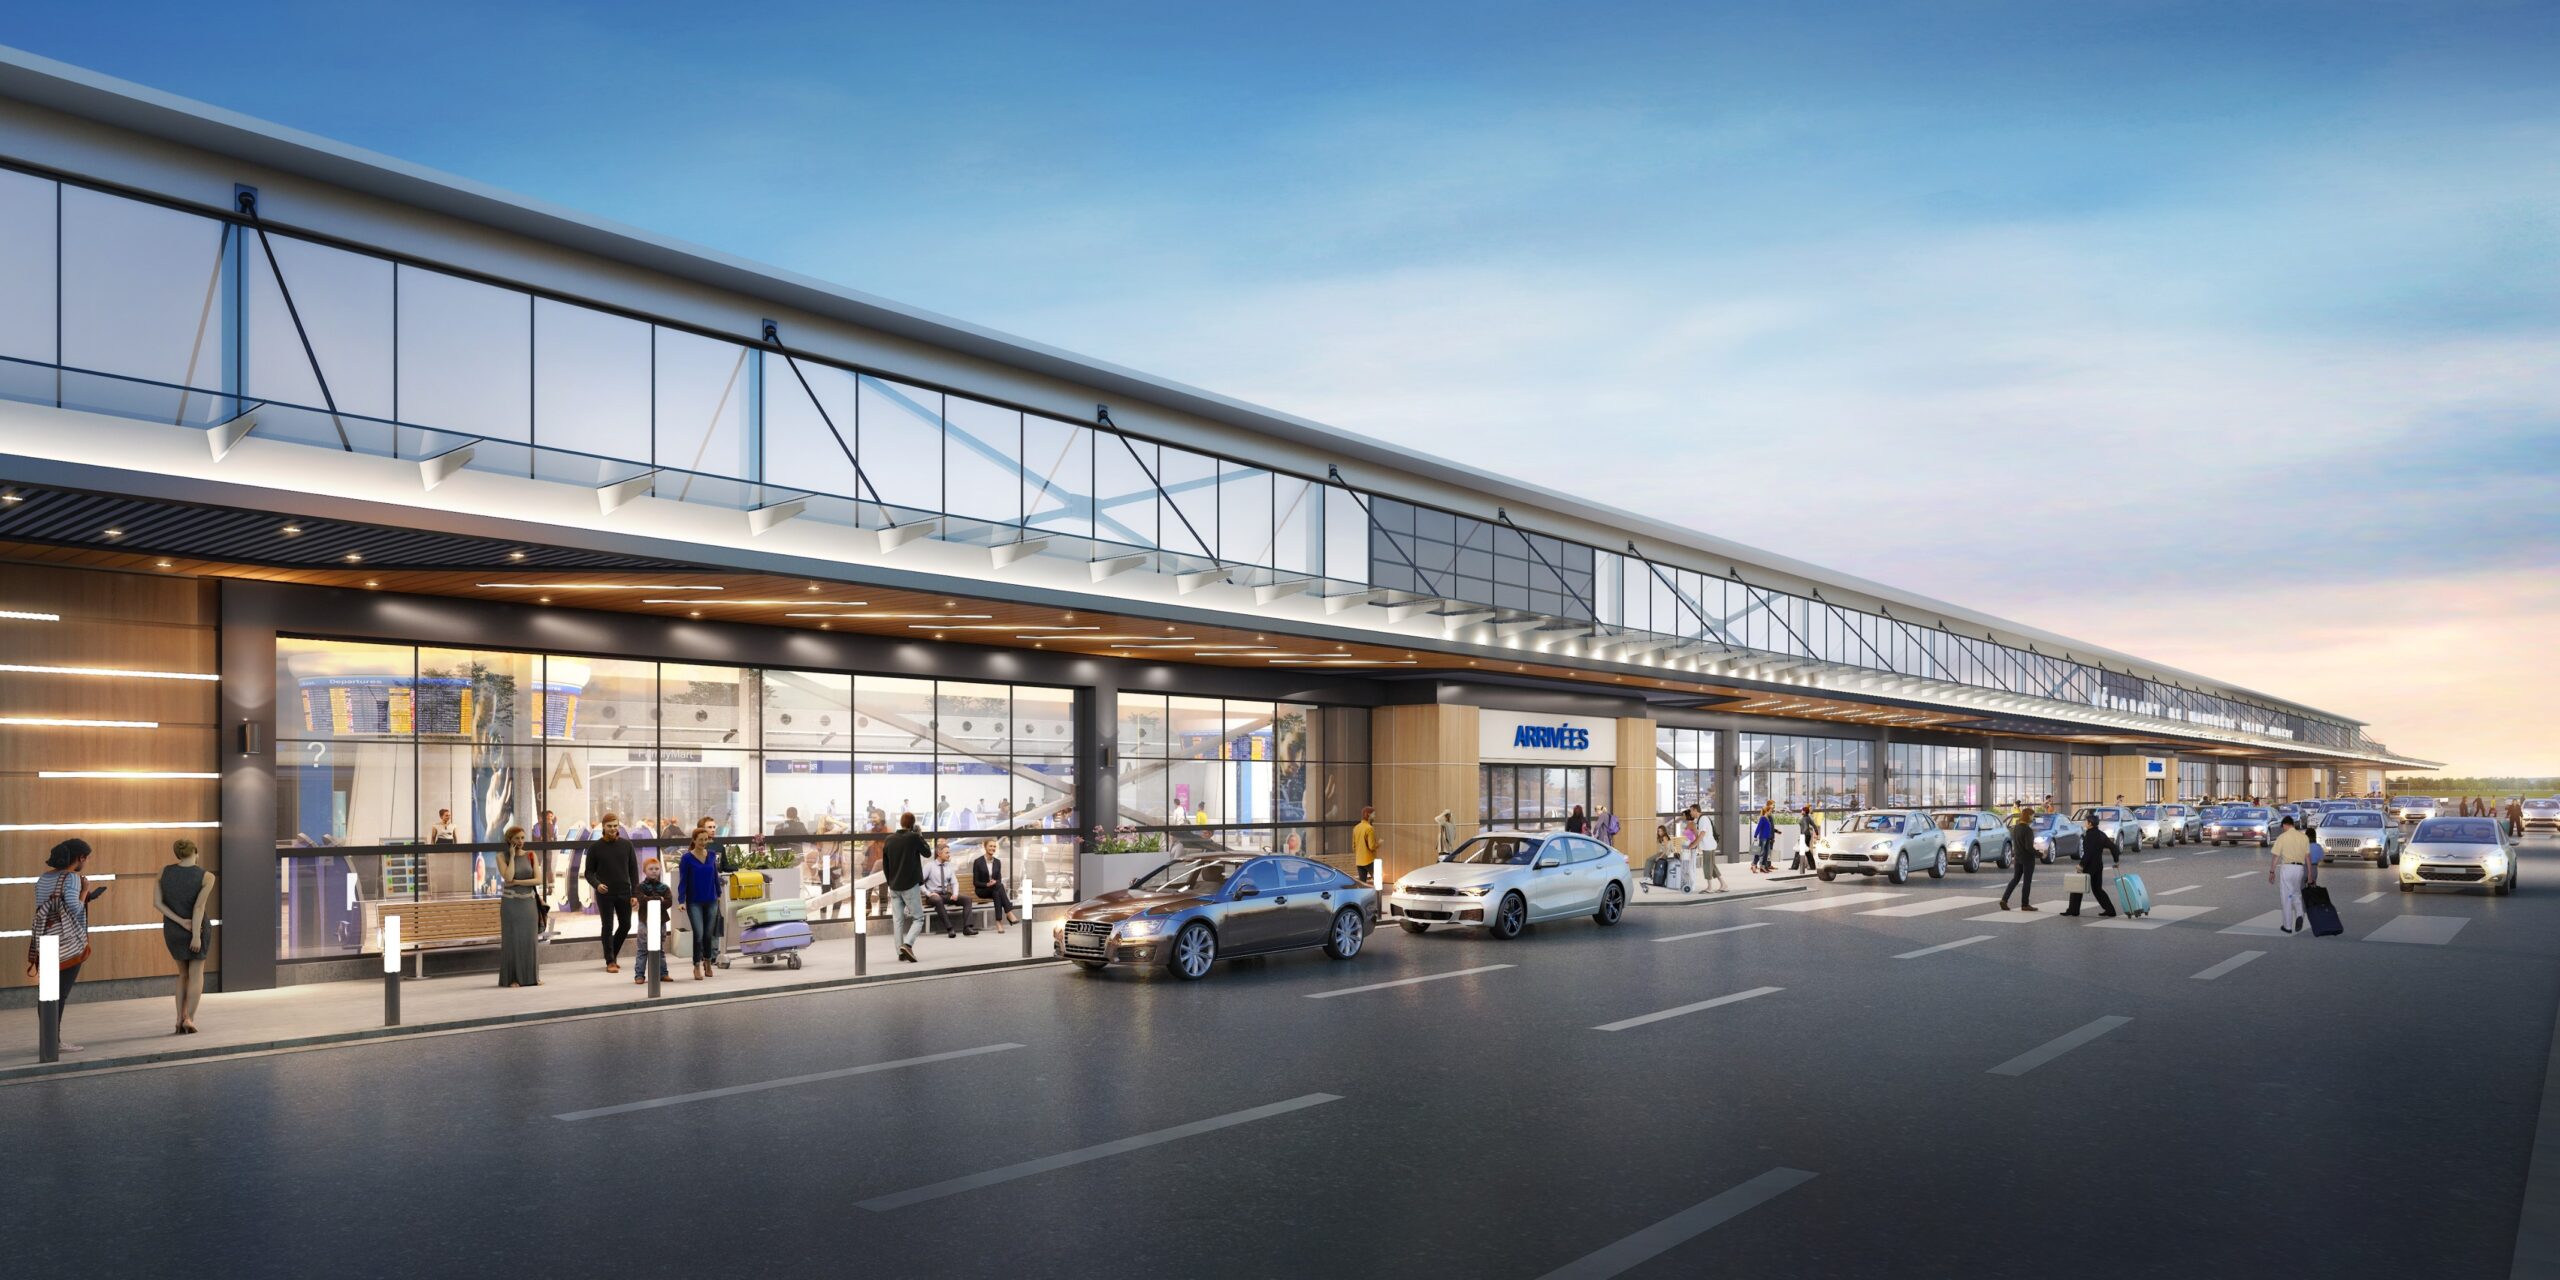 Facade of the future terminal at Montreal Saint-Hubert Airport